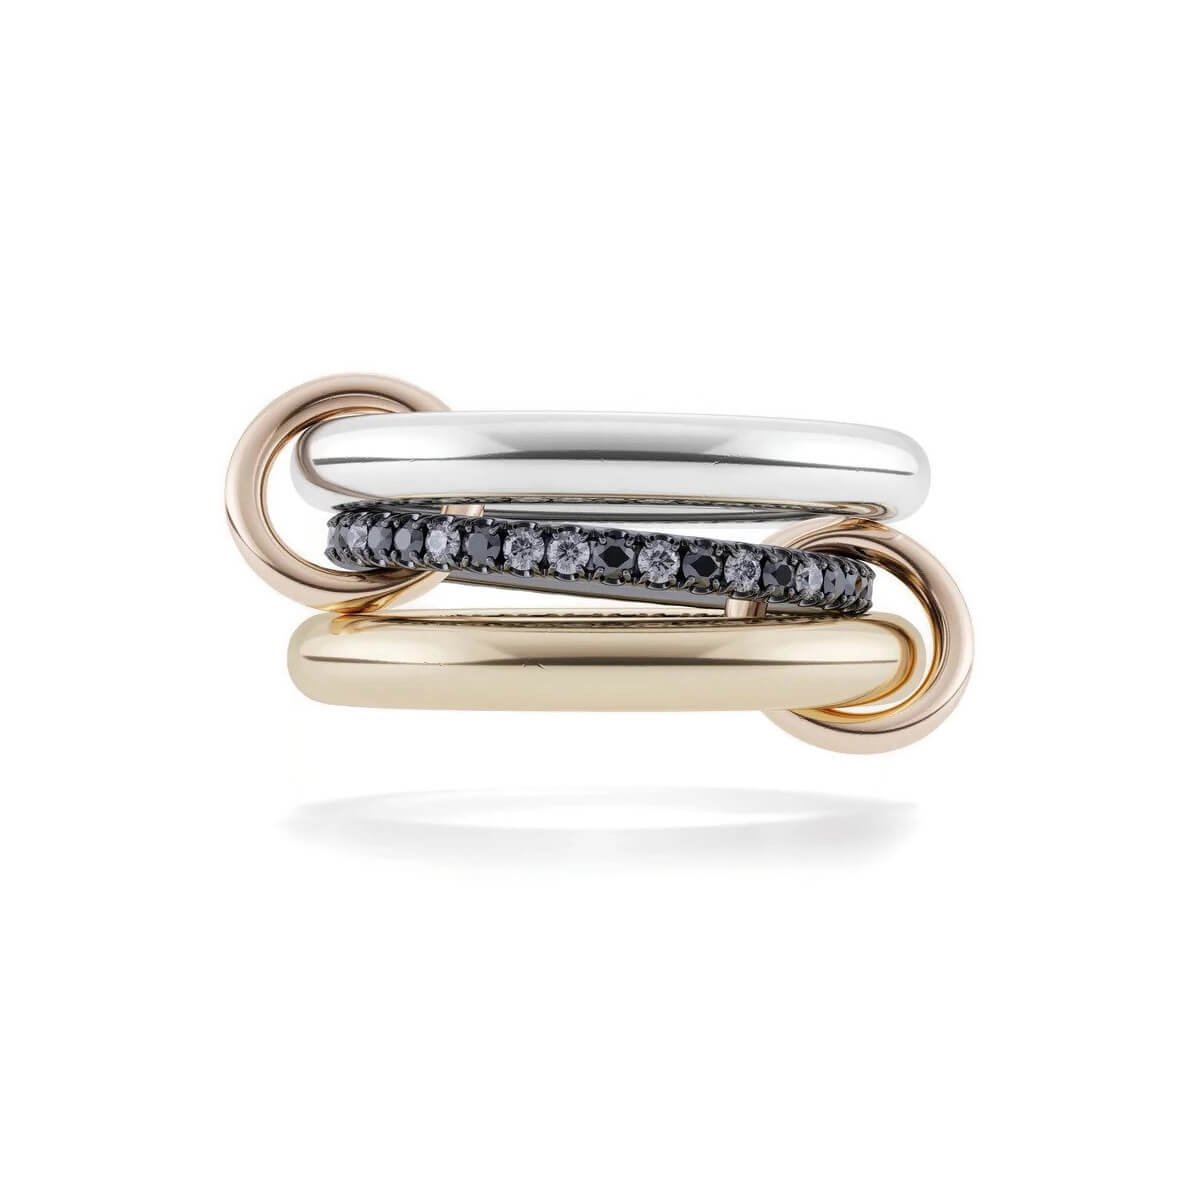 Spinelli Kilcollin Gold and Diamond Libra Ring, $5,400 at FWRD